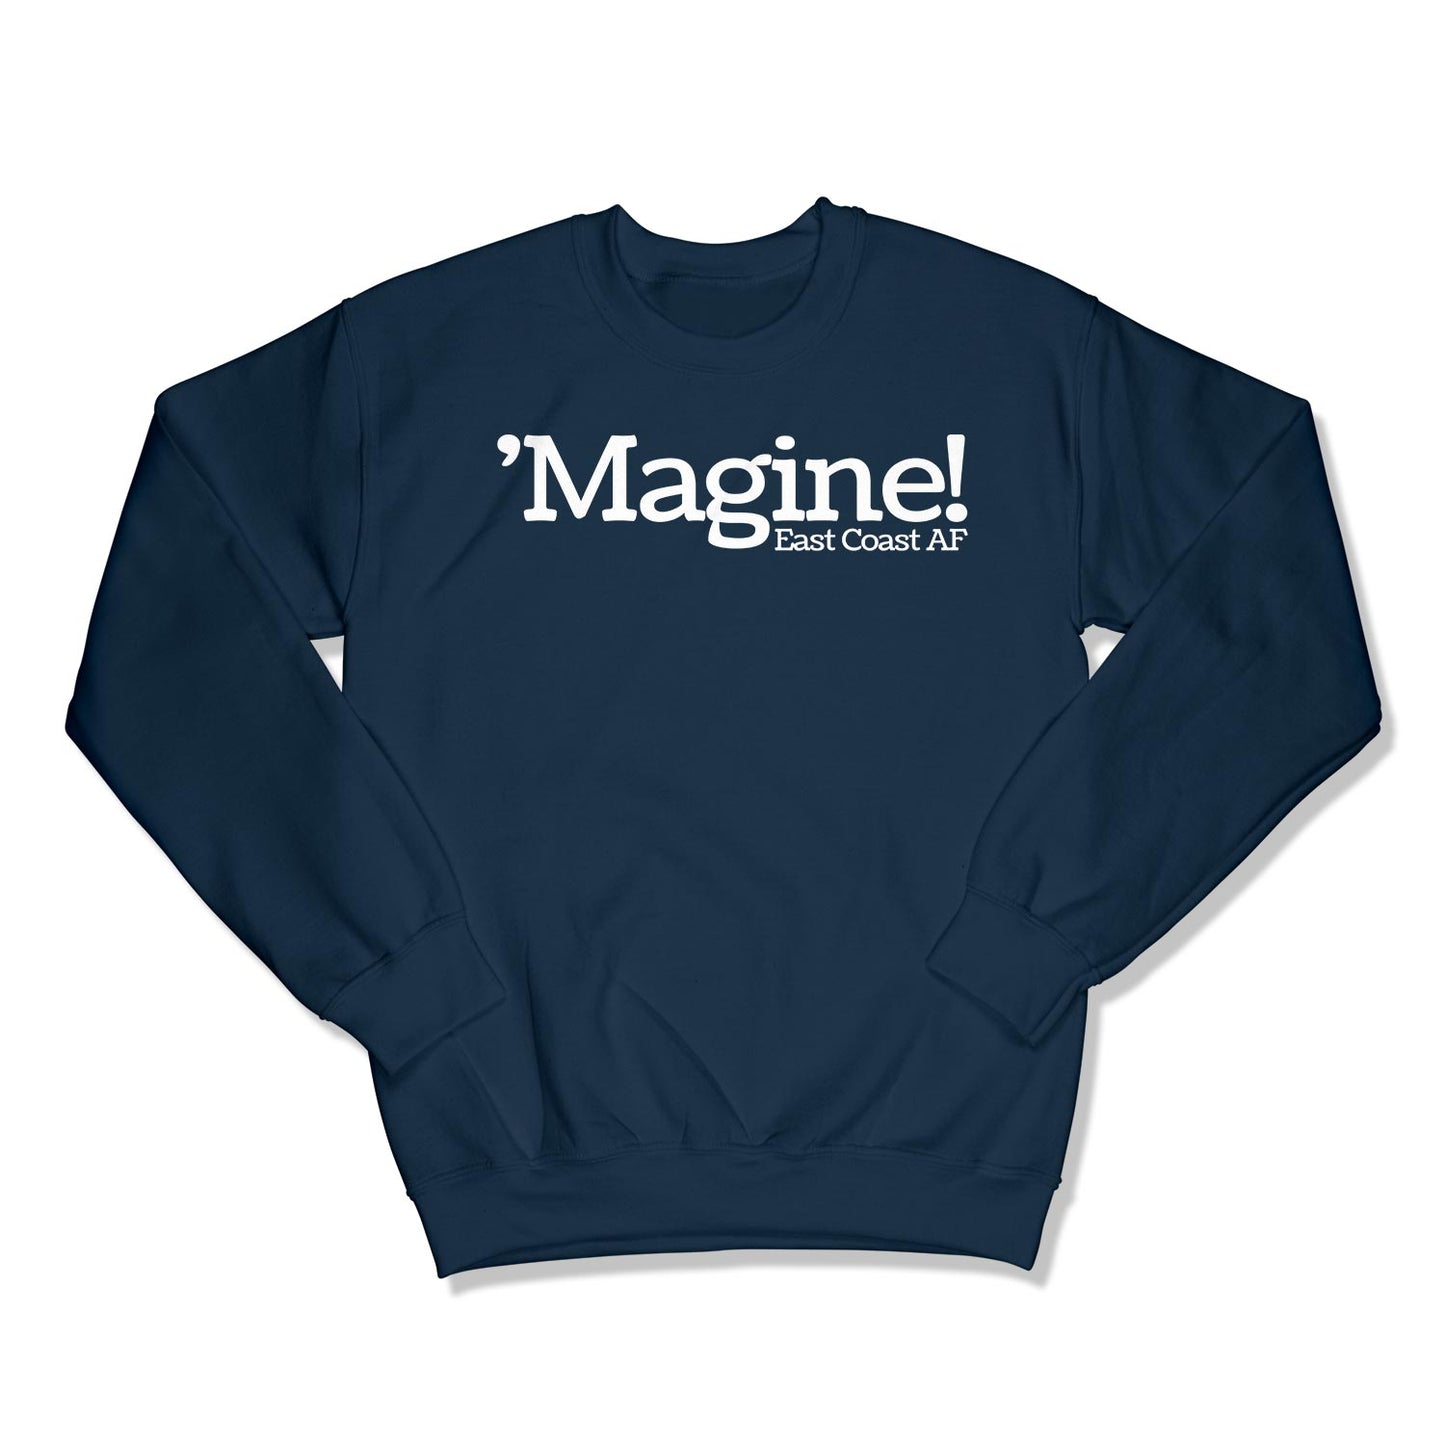 'Magine! Unisex Crewneck Sweatshirt in Color: Navy - East Coast AF Apparel